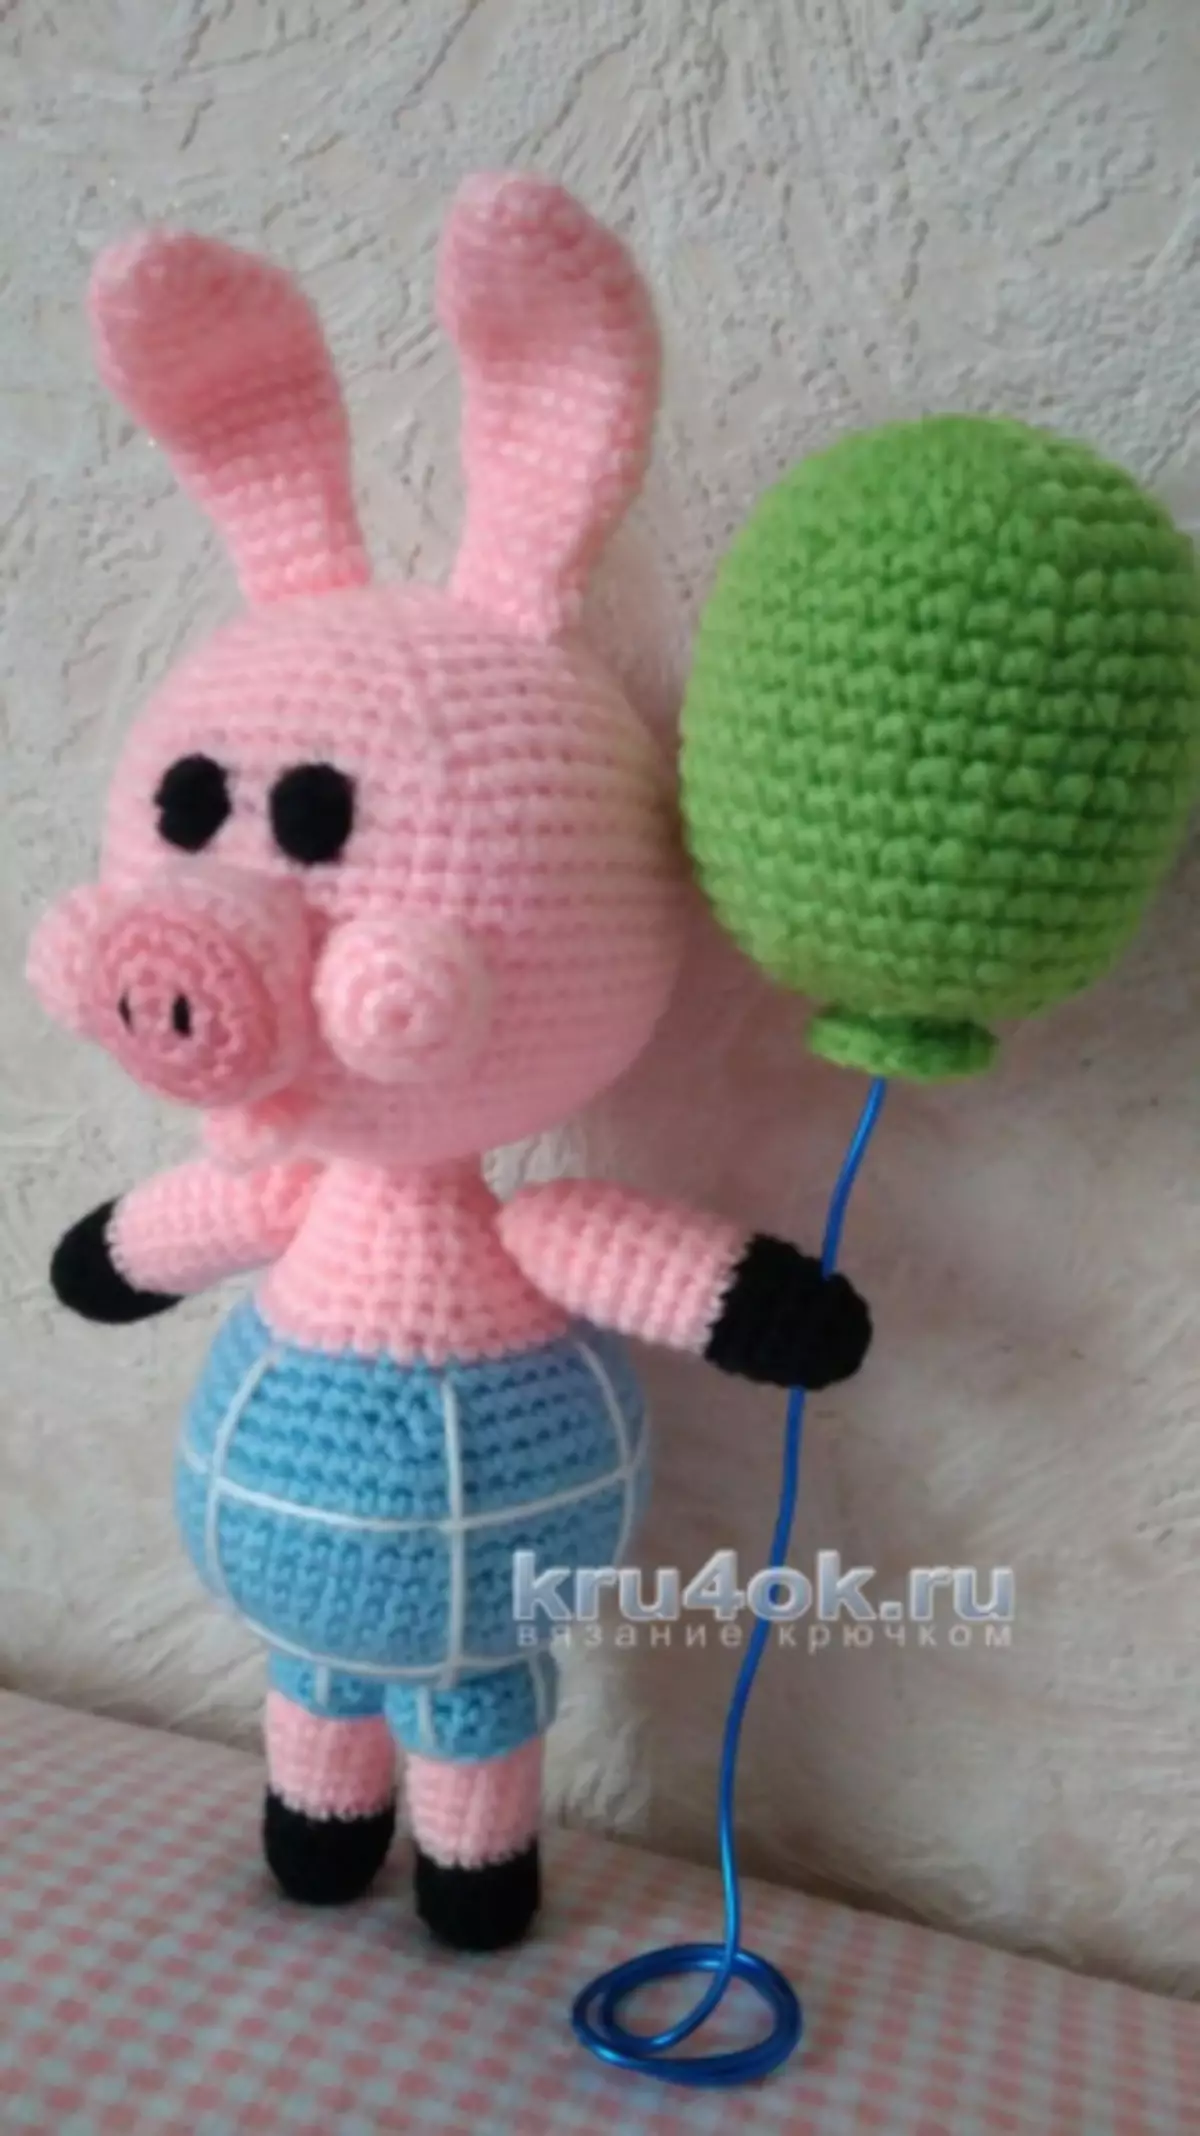 Winnie Pooh Crochet: სამაგისტრო კლასი აღწერა და სქემები